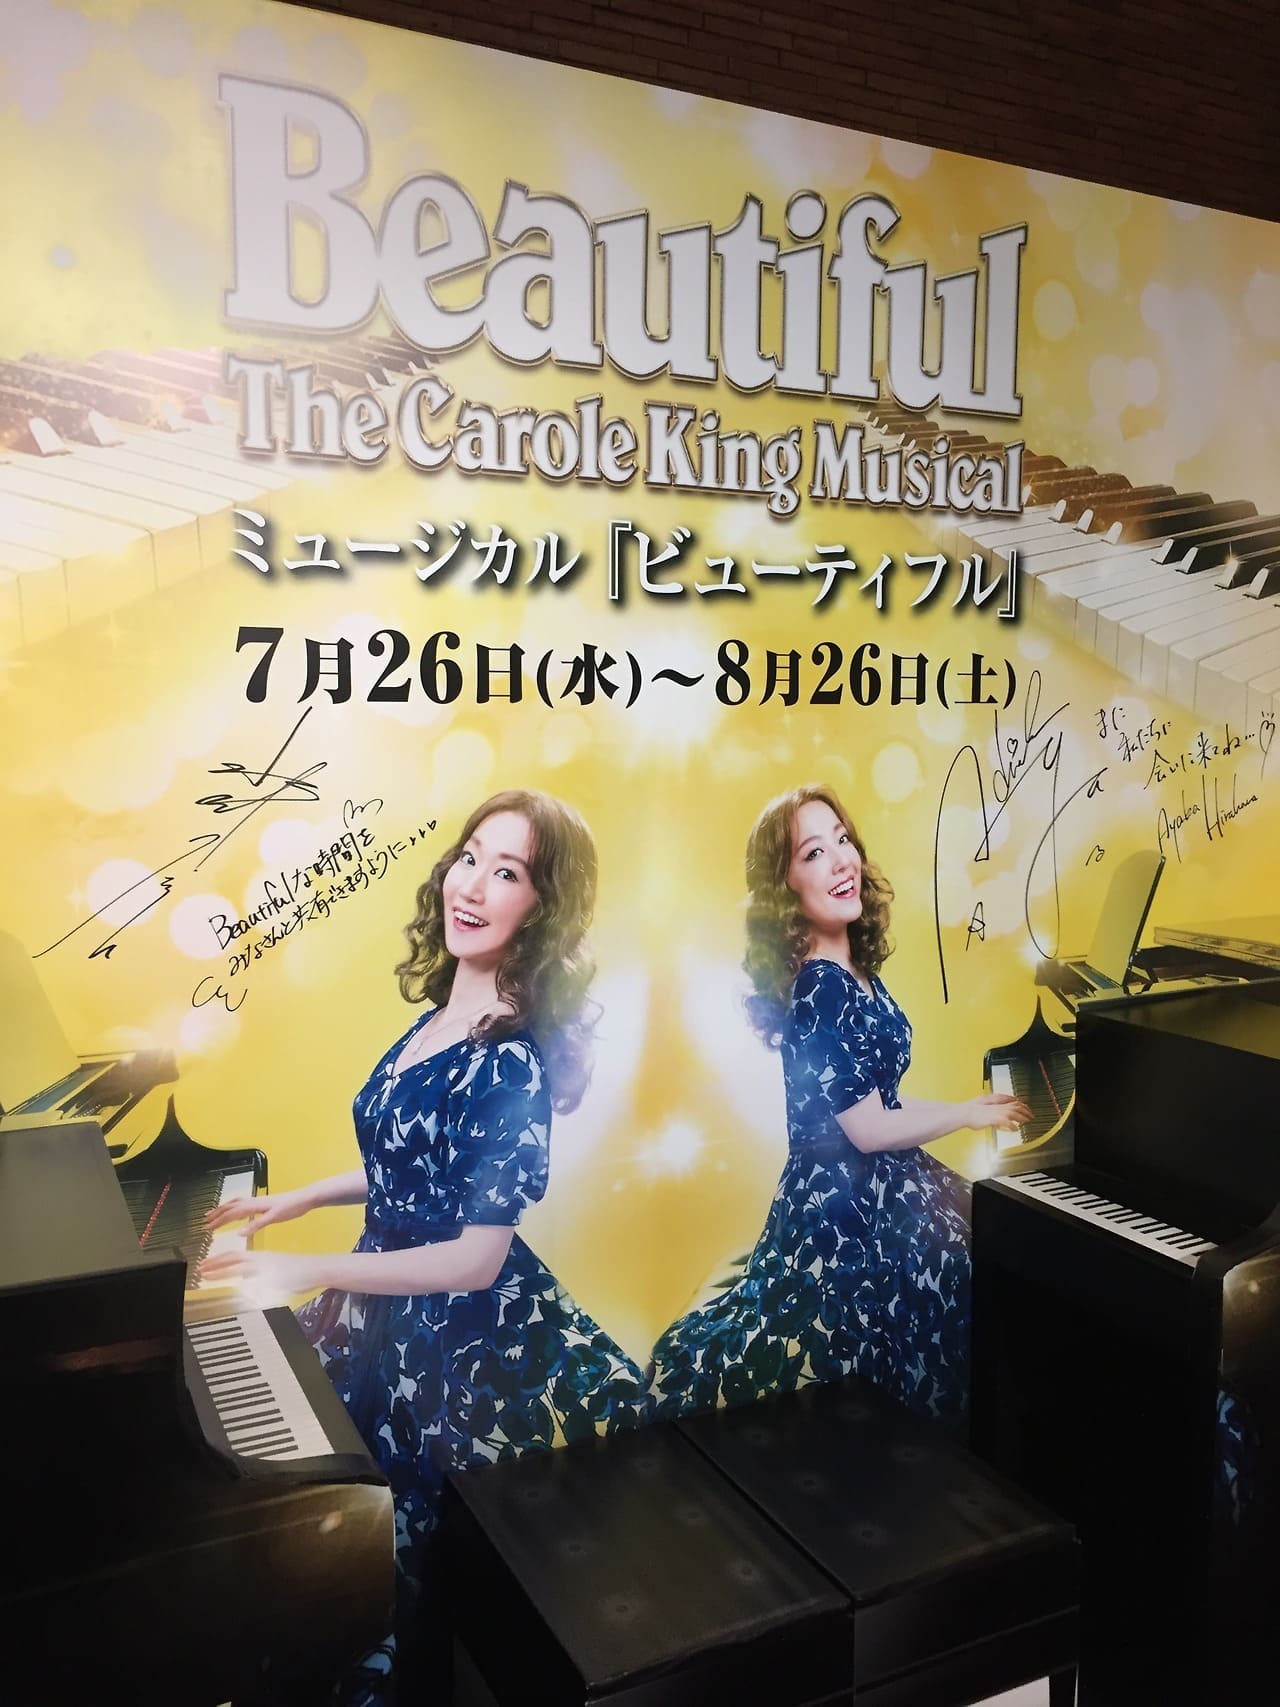 Beautiful The Carole King Musical